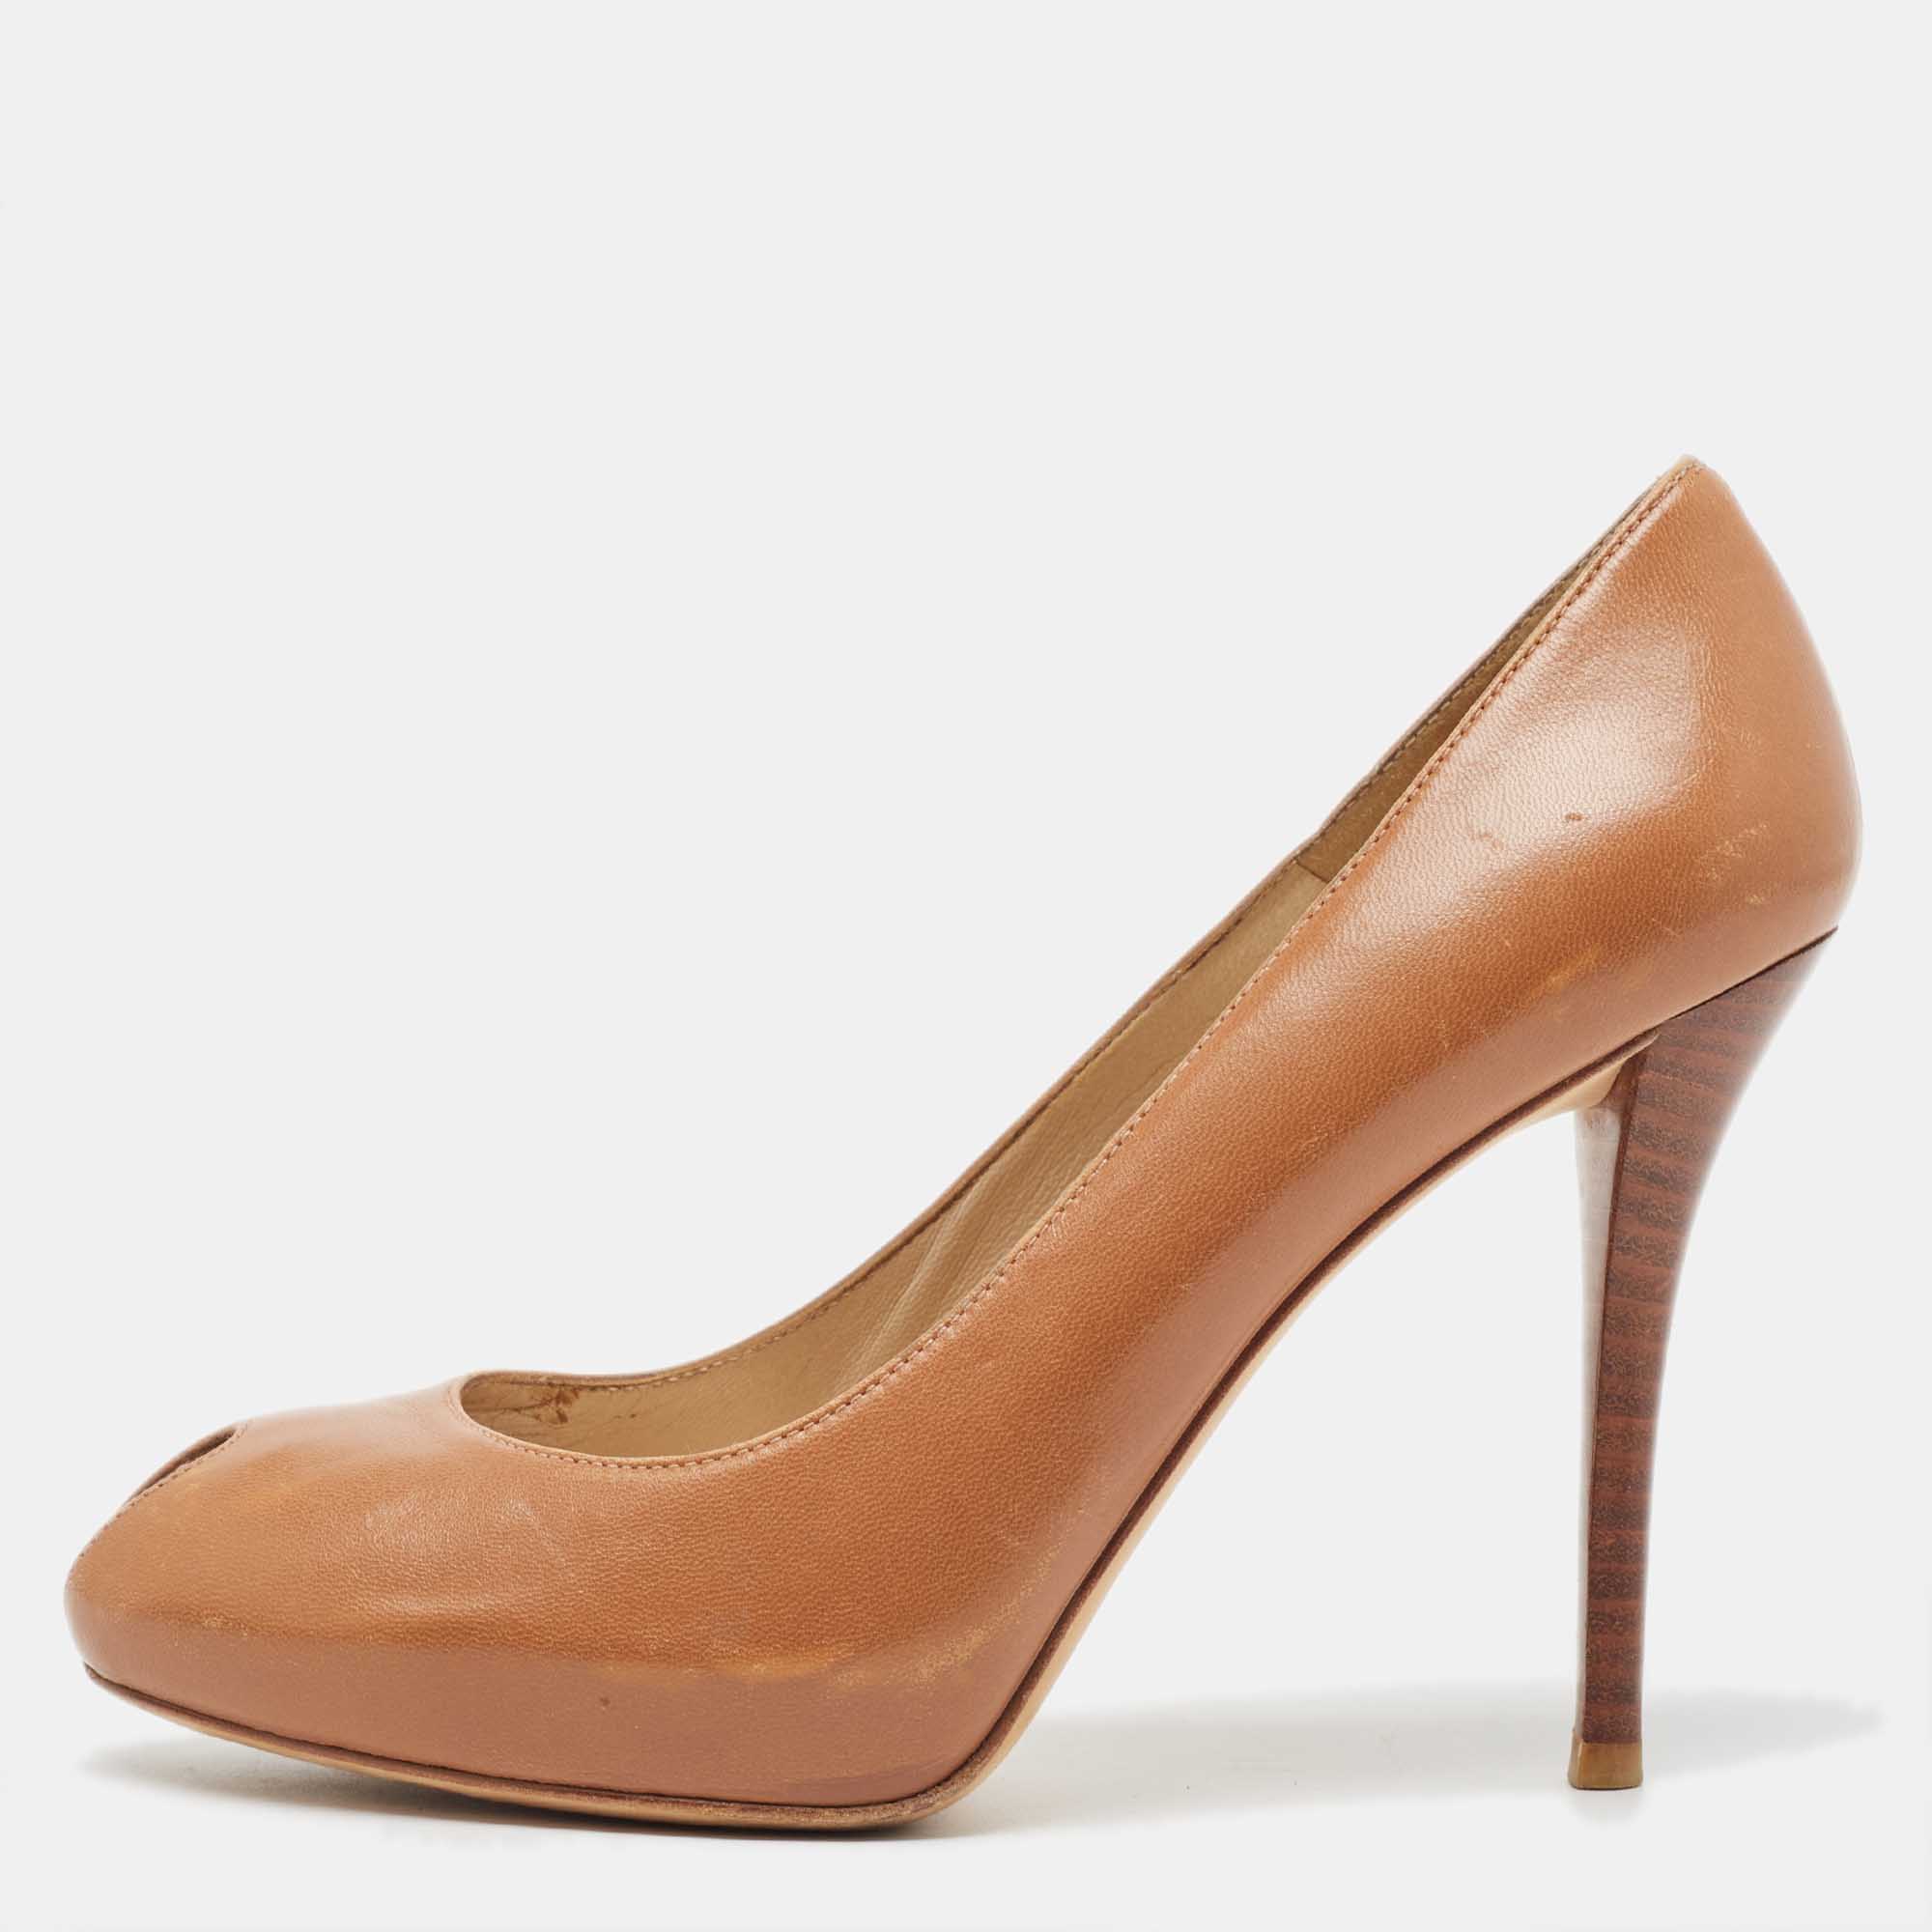 Stuart weitzman brown leather peep toe pumps size 38.5